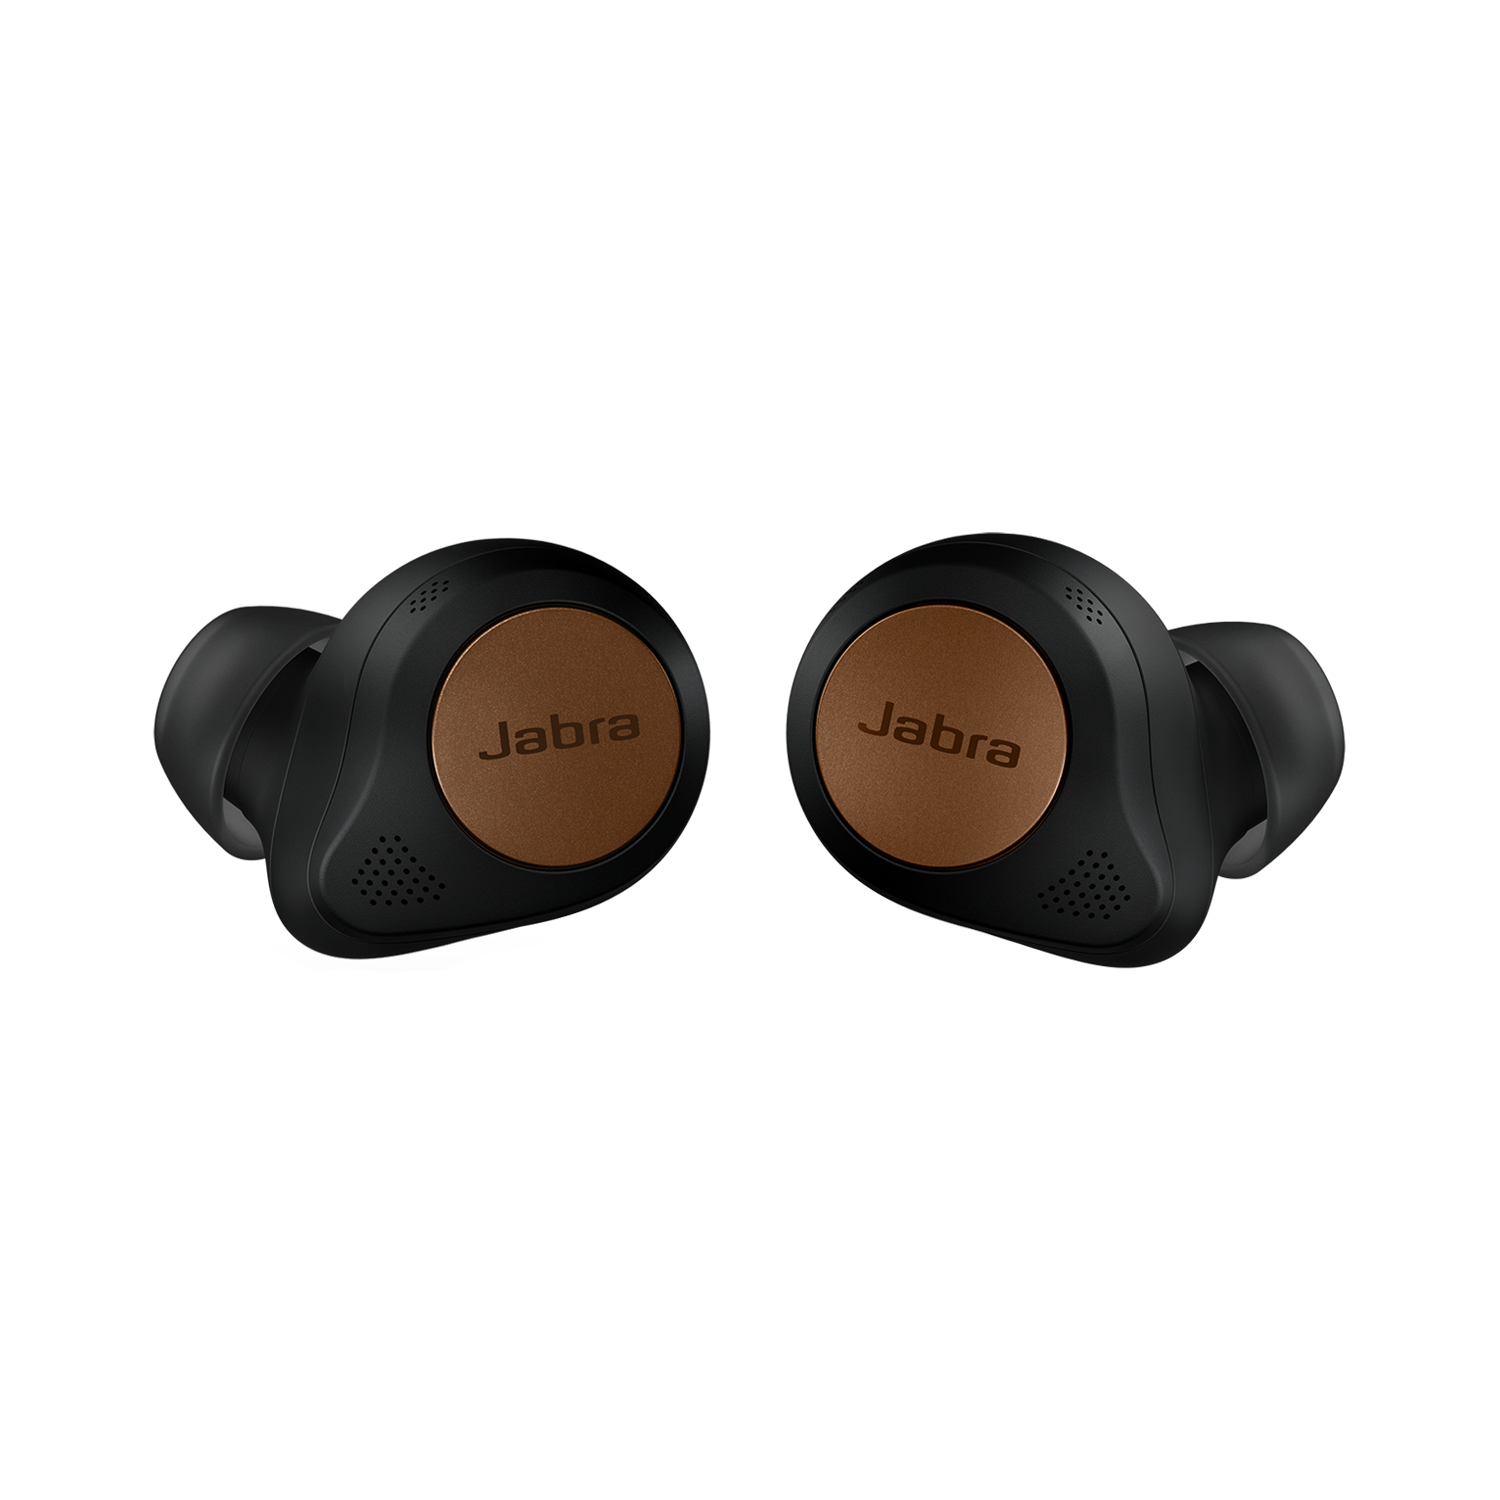 Jabra Elite 85t Replacement Earbuds - Copper Black